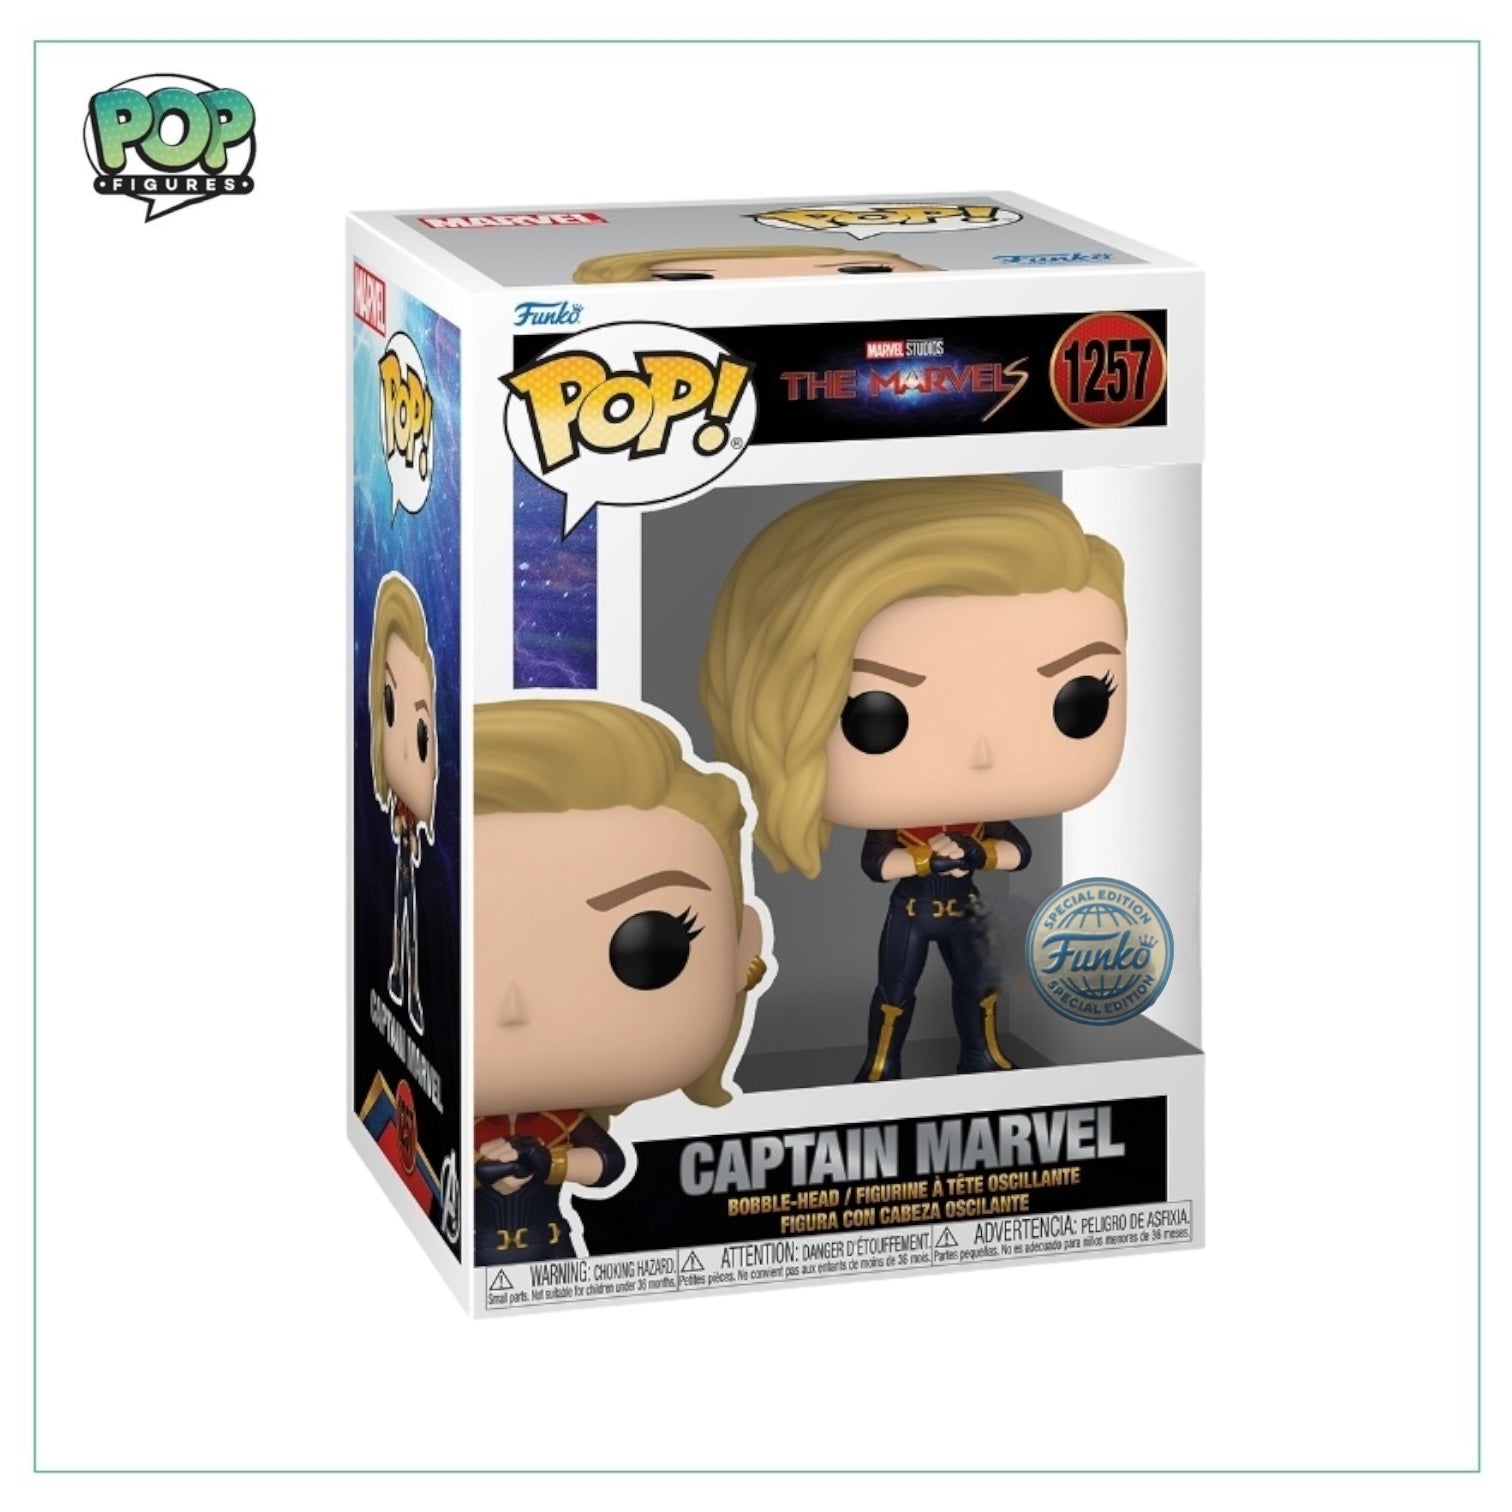 Captain Marvel #1257 Funko Pop! - The Marvels - Special Edition - Pop Figures Exclusive